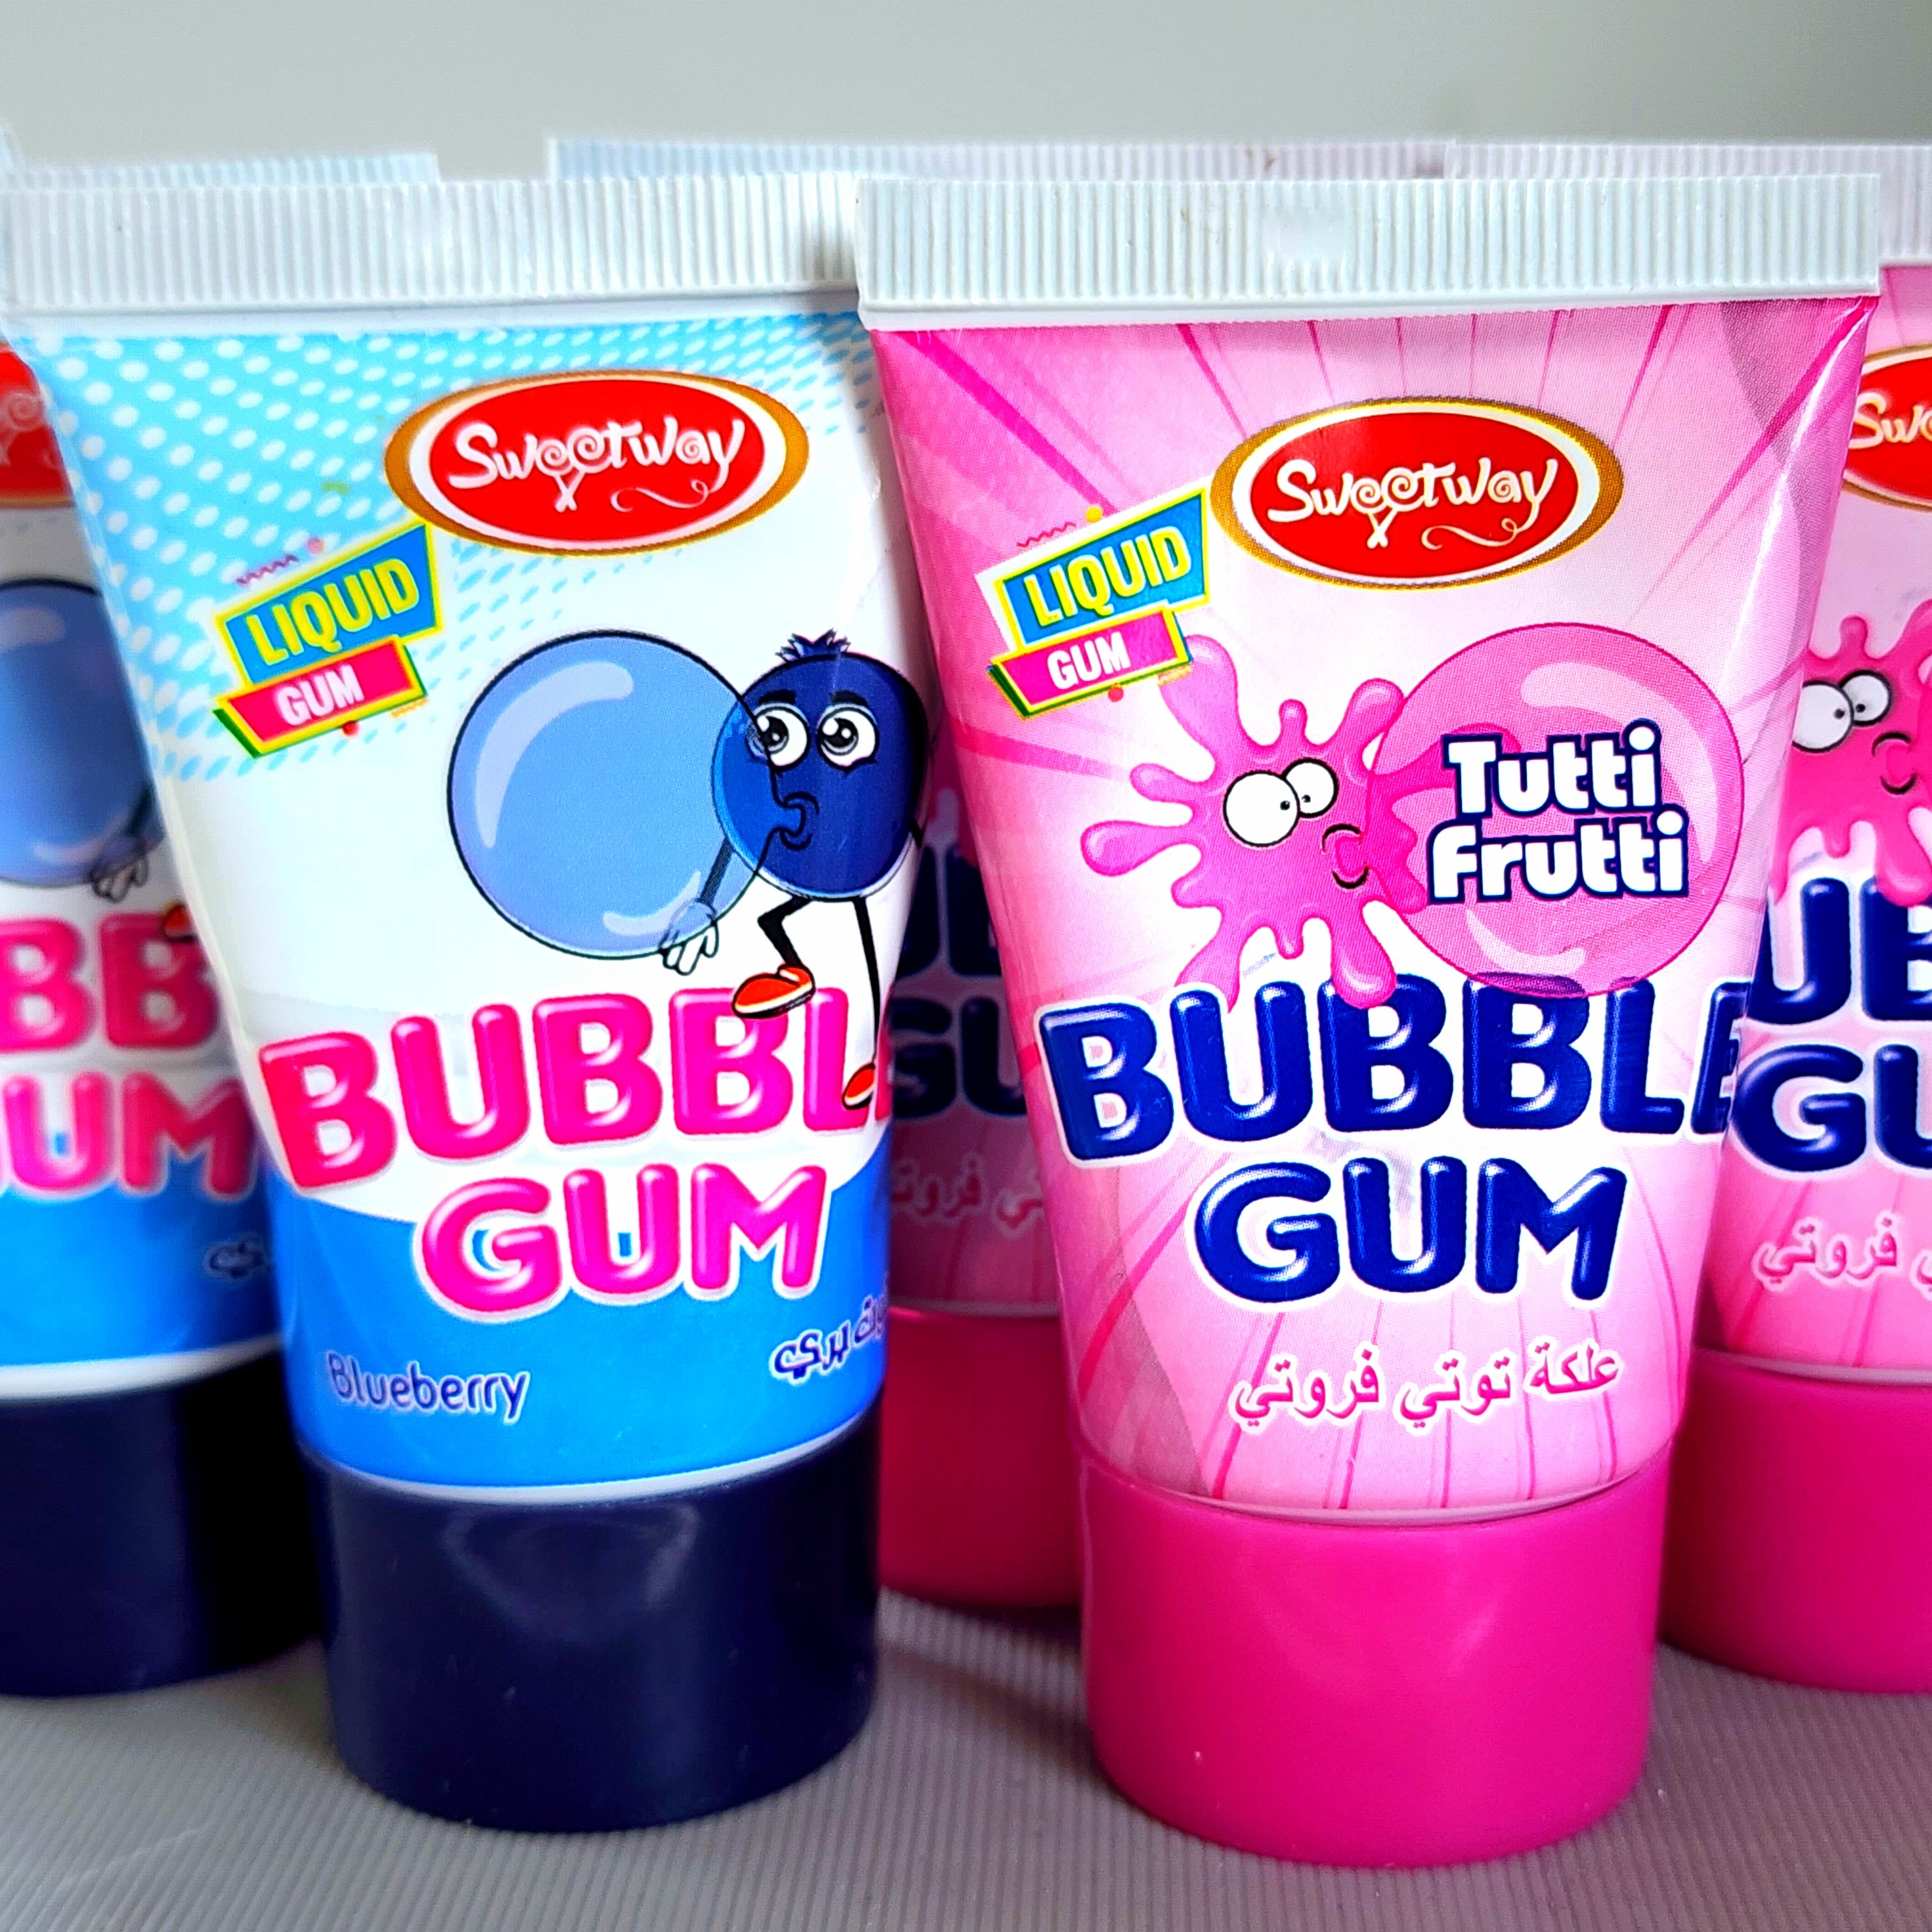 Sweetway Liquid Bubble Gum Tubes - Pik n Mix Lollies NZ